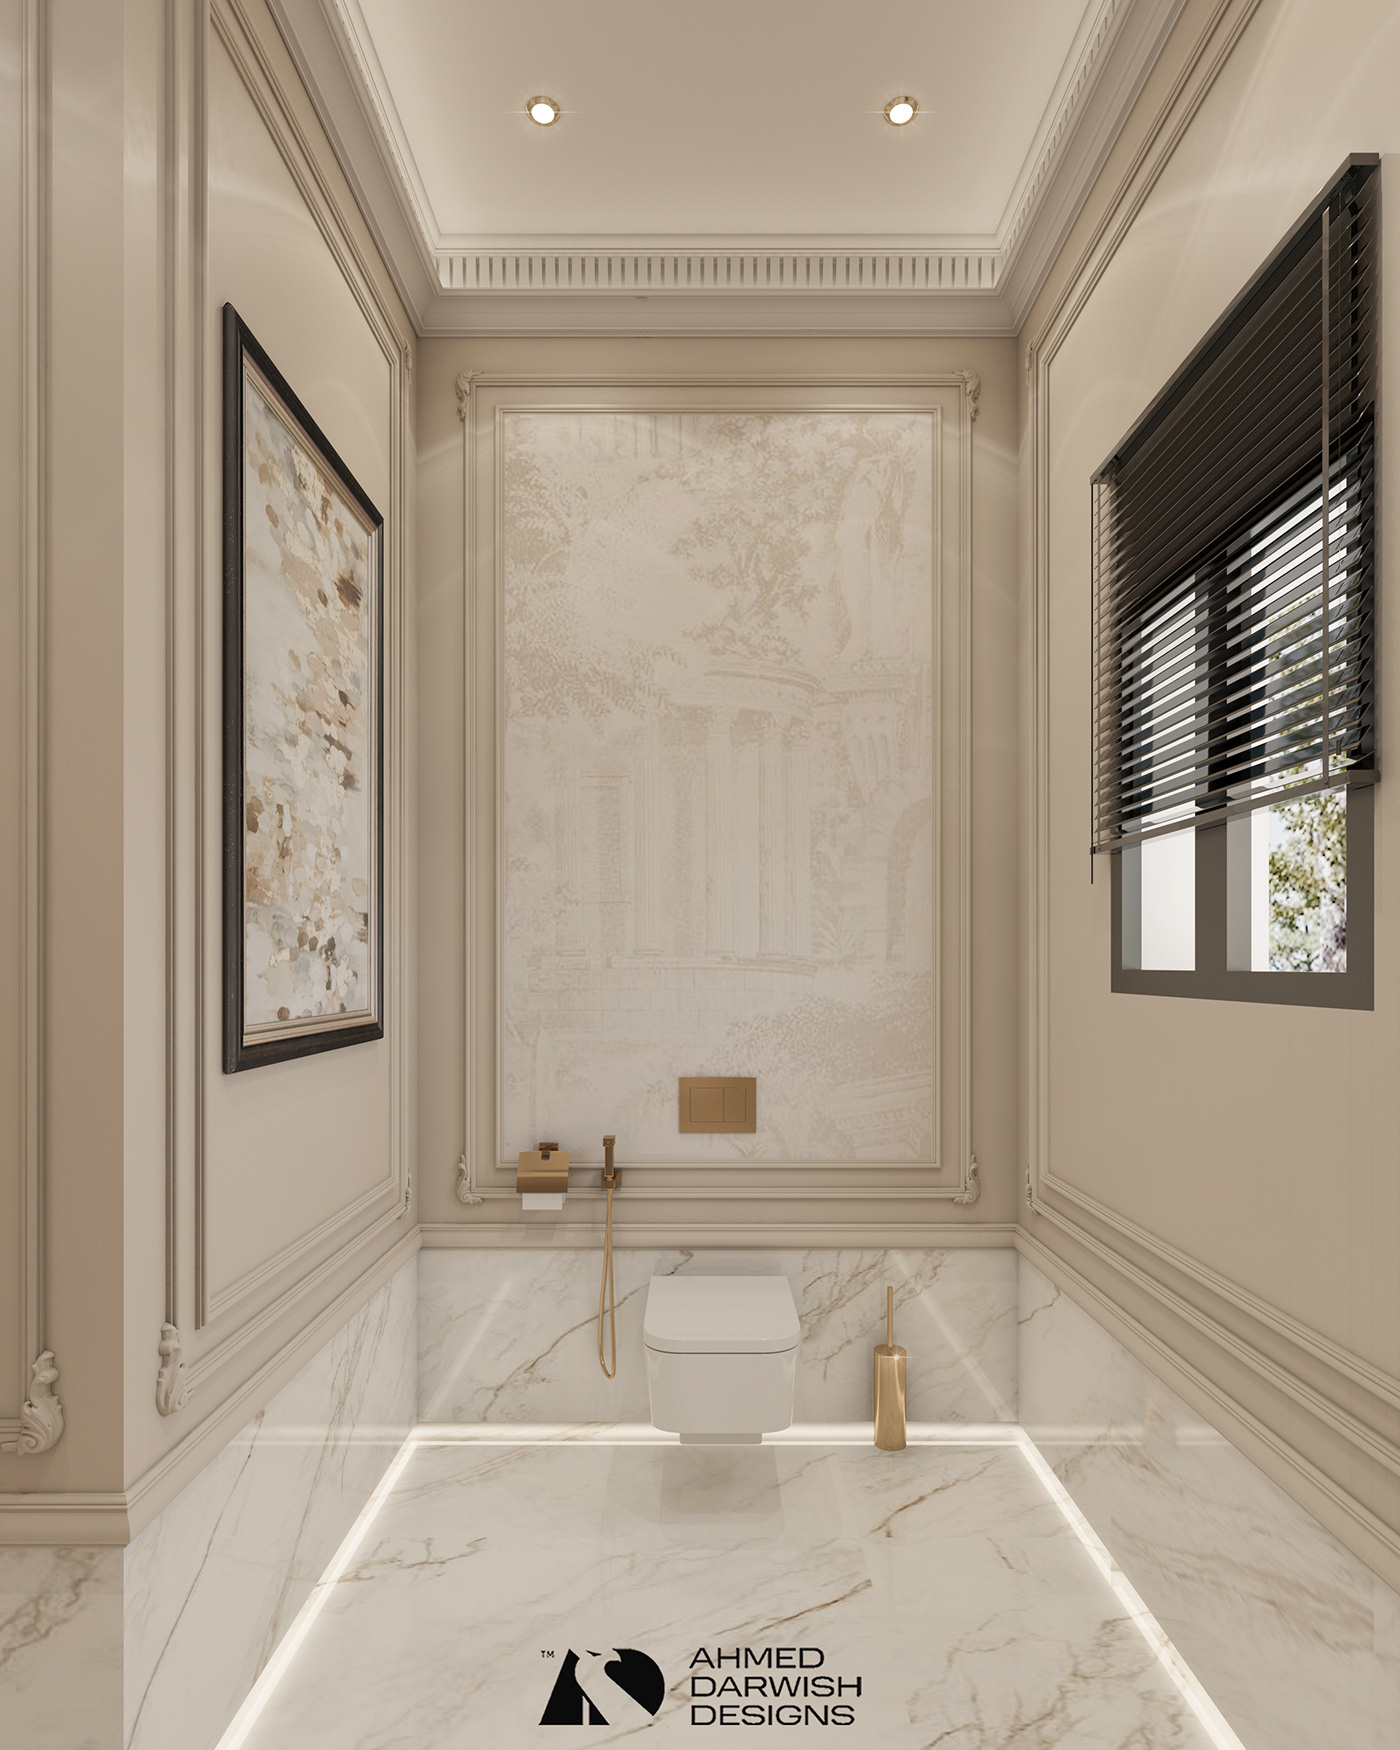 Interior design bathroom visualization Render 3D 3ds max vray luxury gold